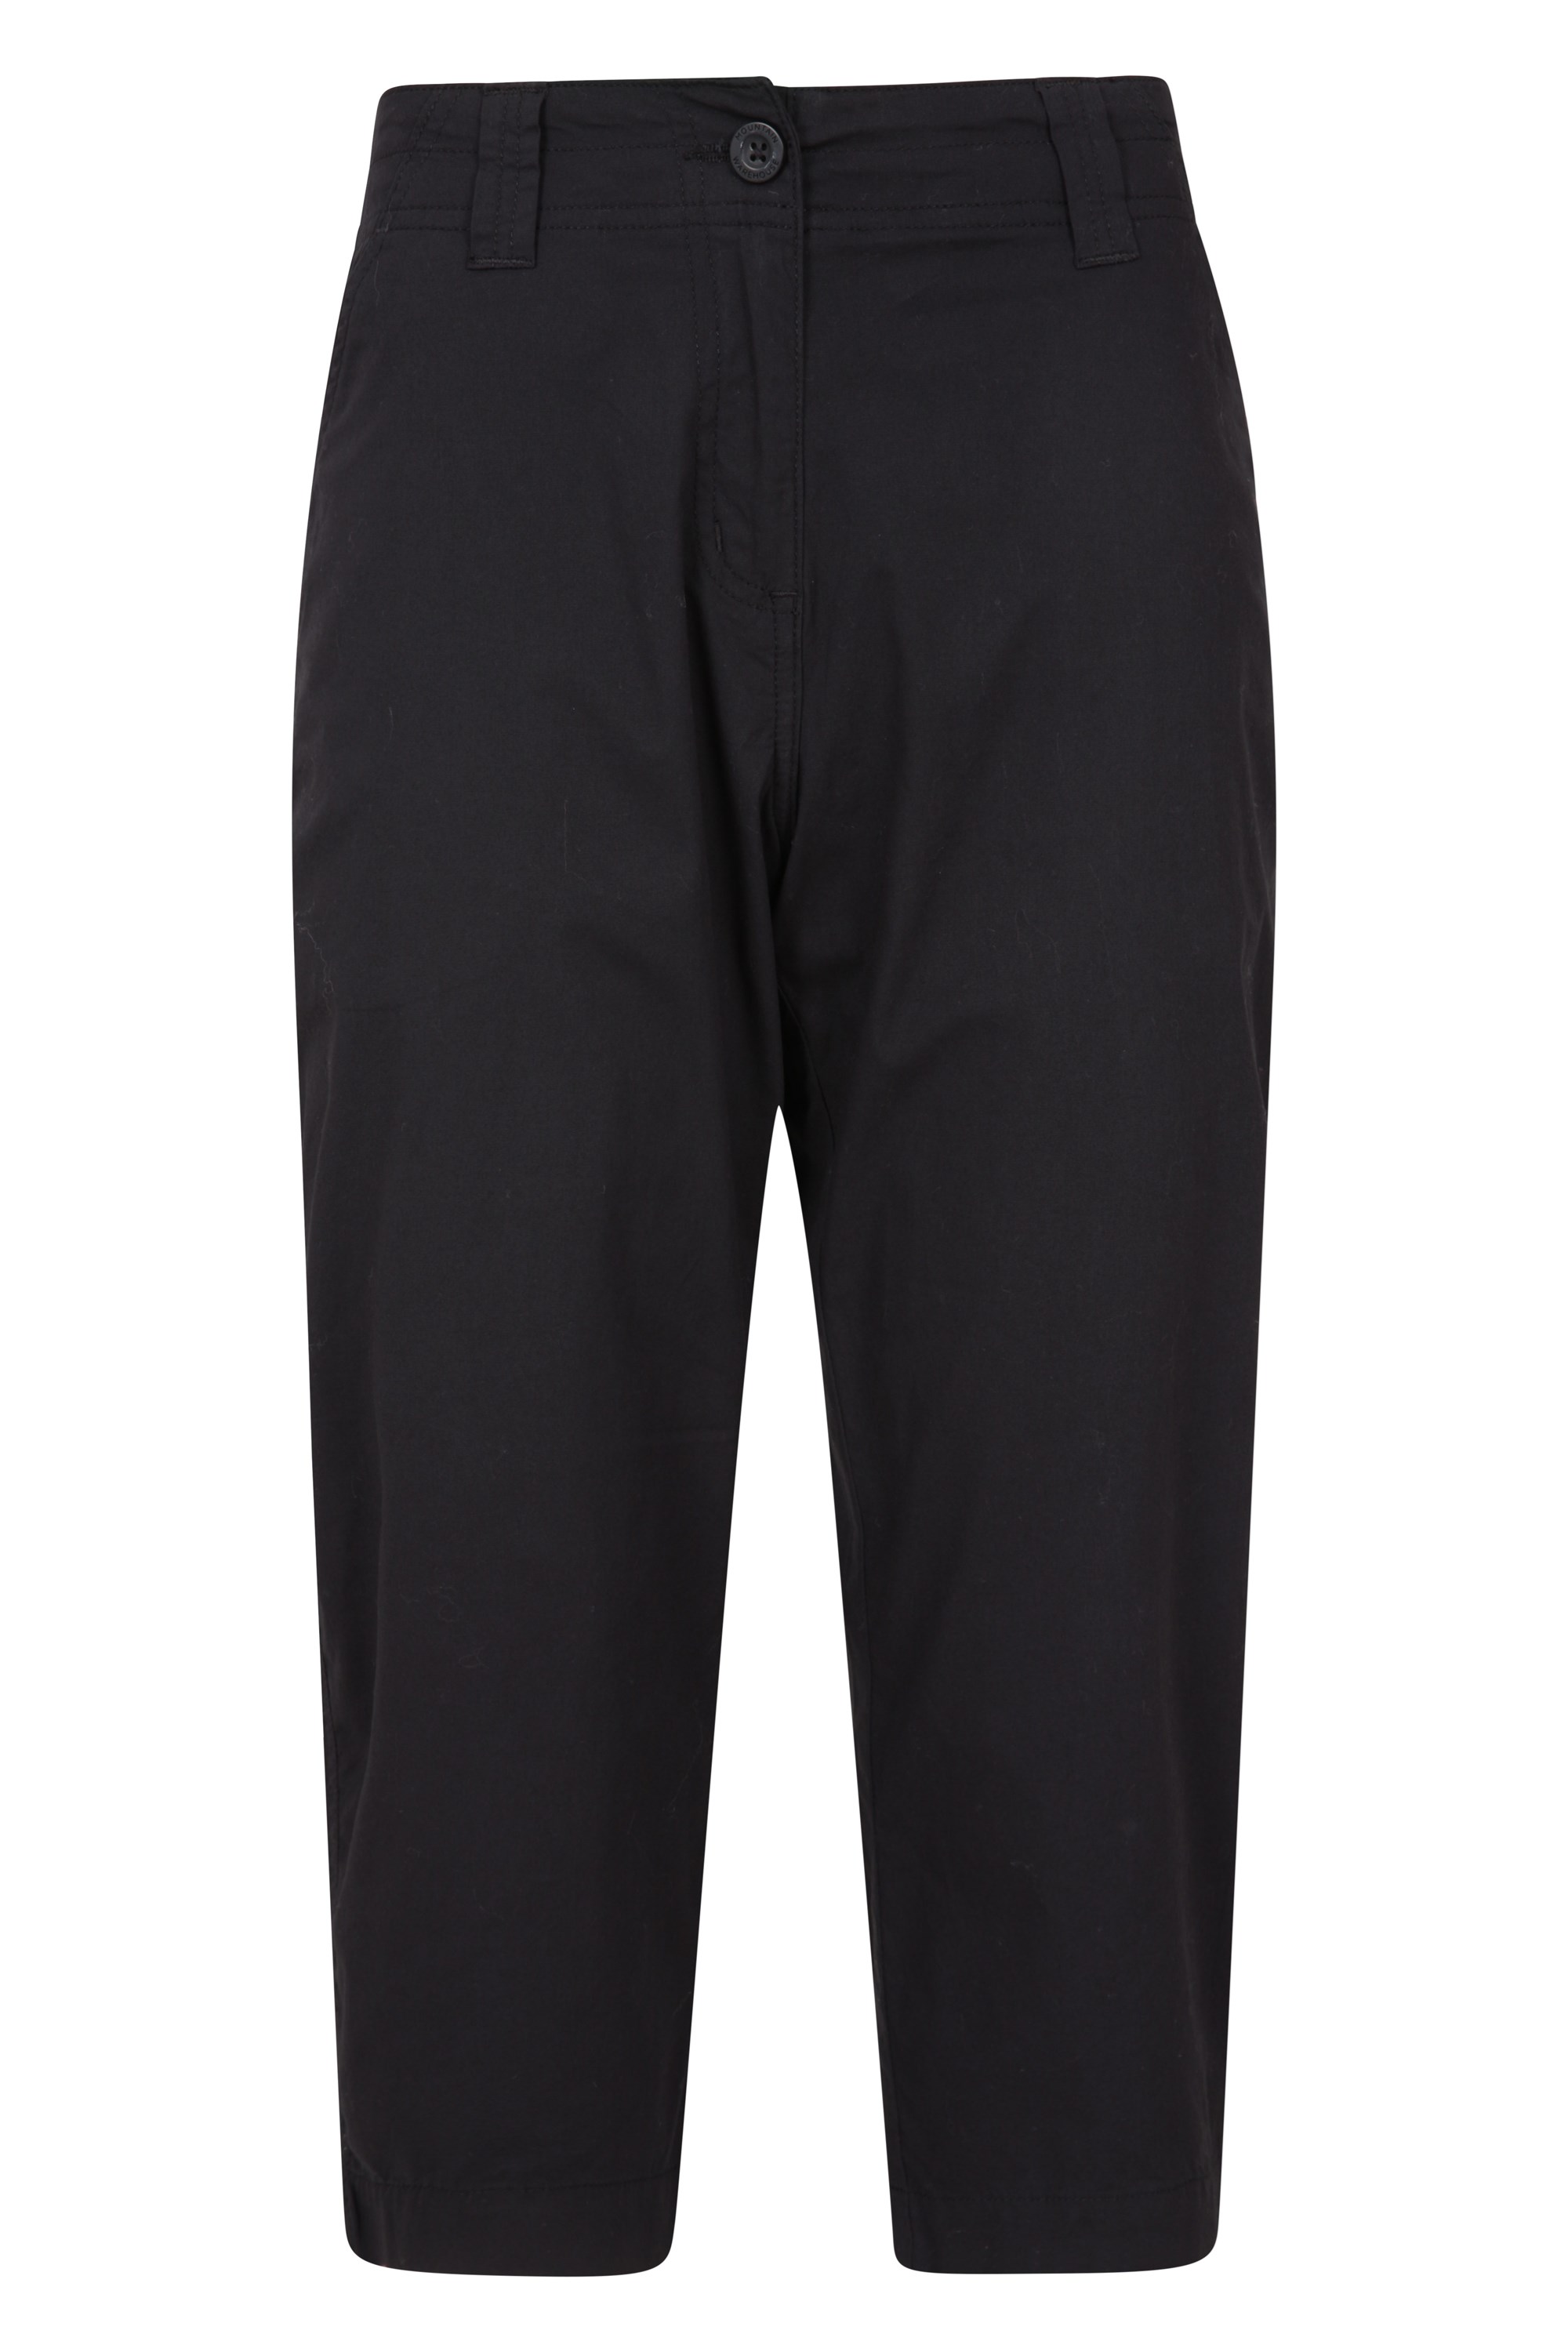 Mocoly Gray Capri Quick Dry Hiking Pants Womens Size XXL Zip